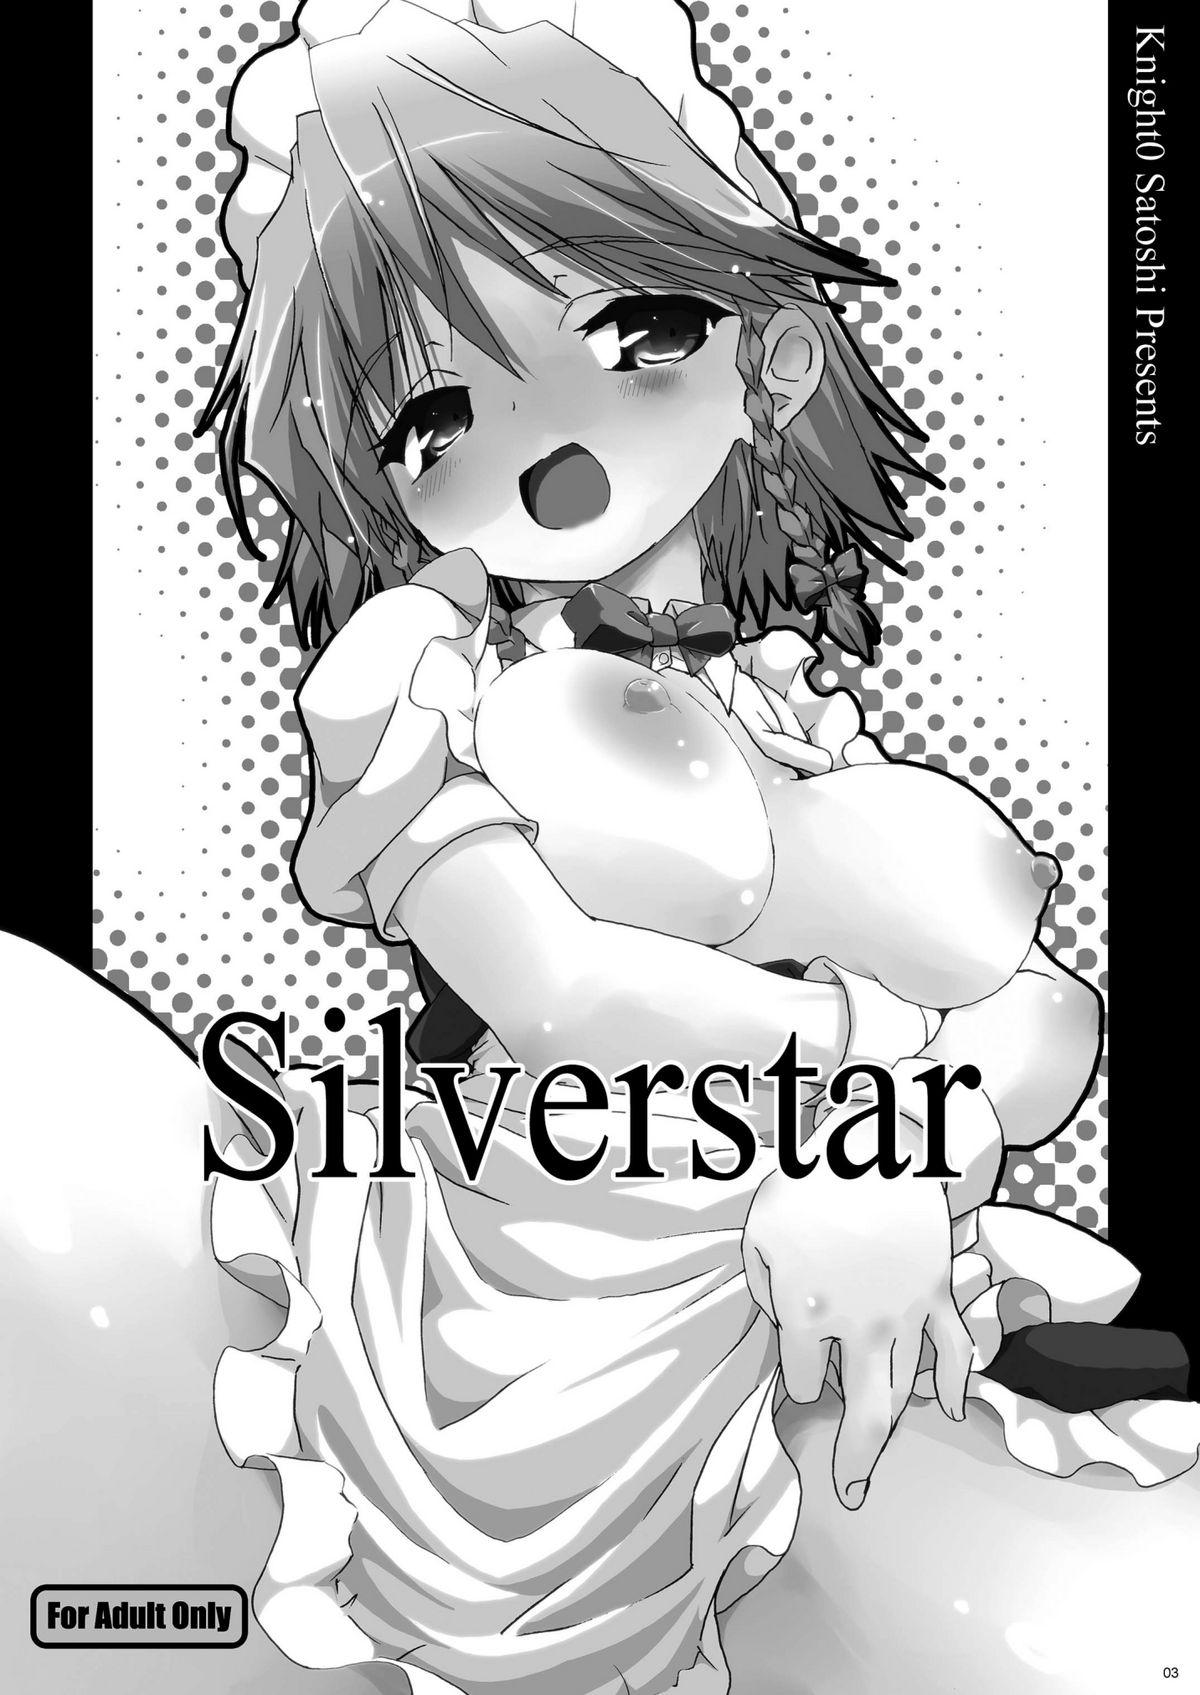 Silverstar 2